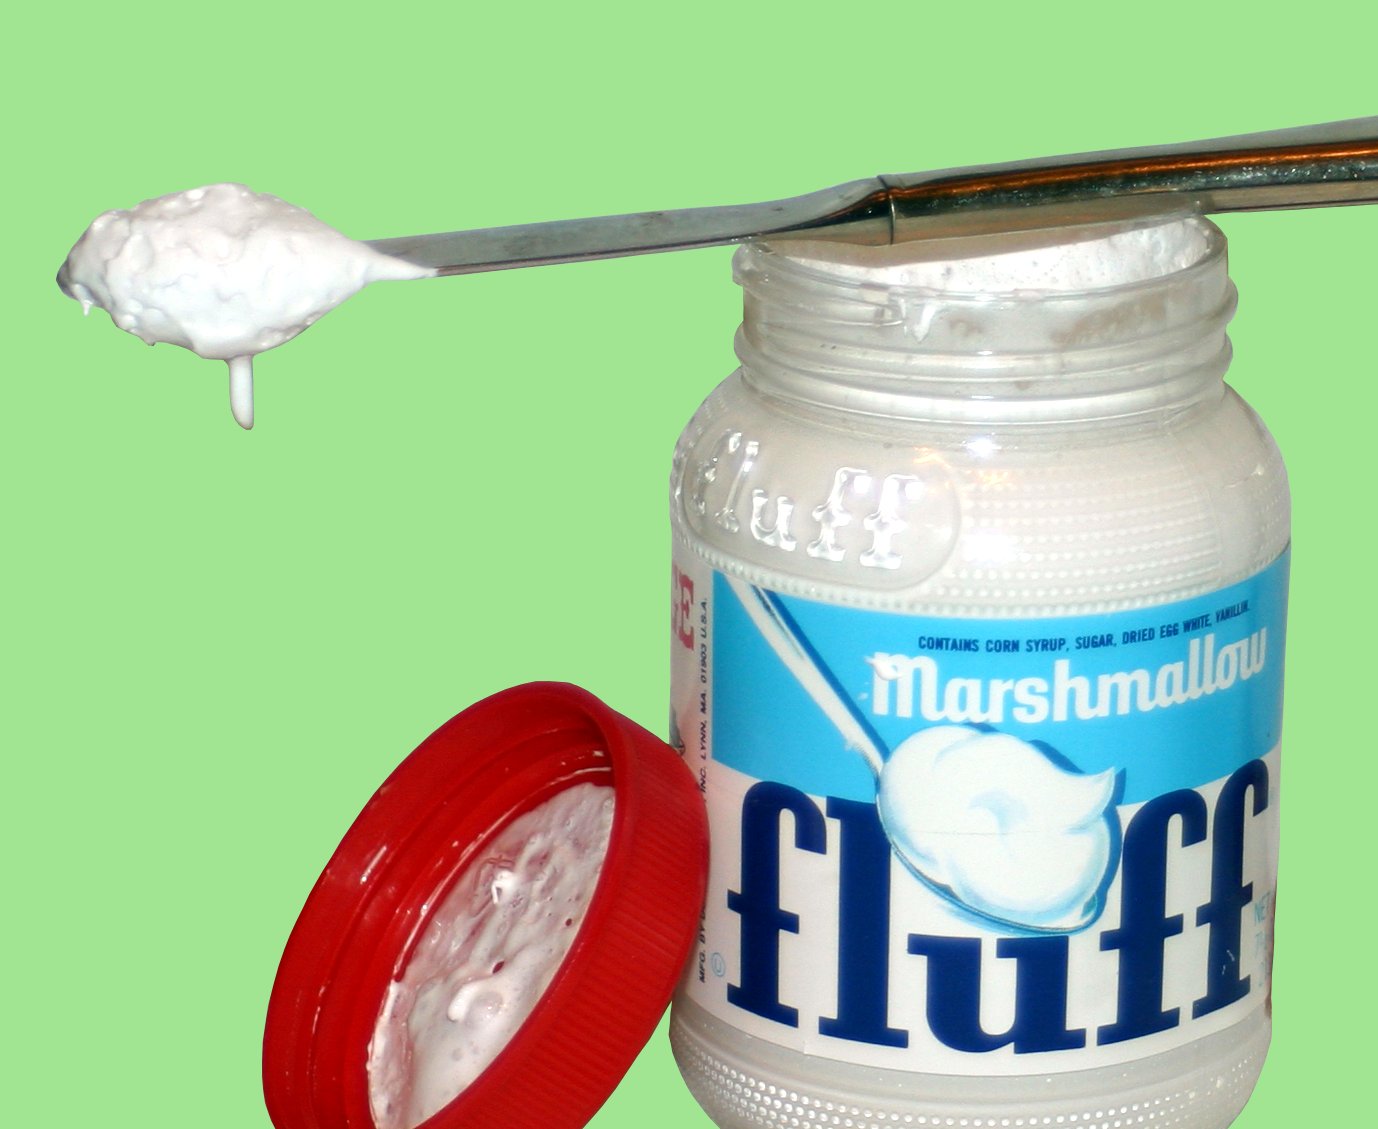 Marshmallow fluff